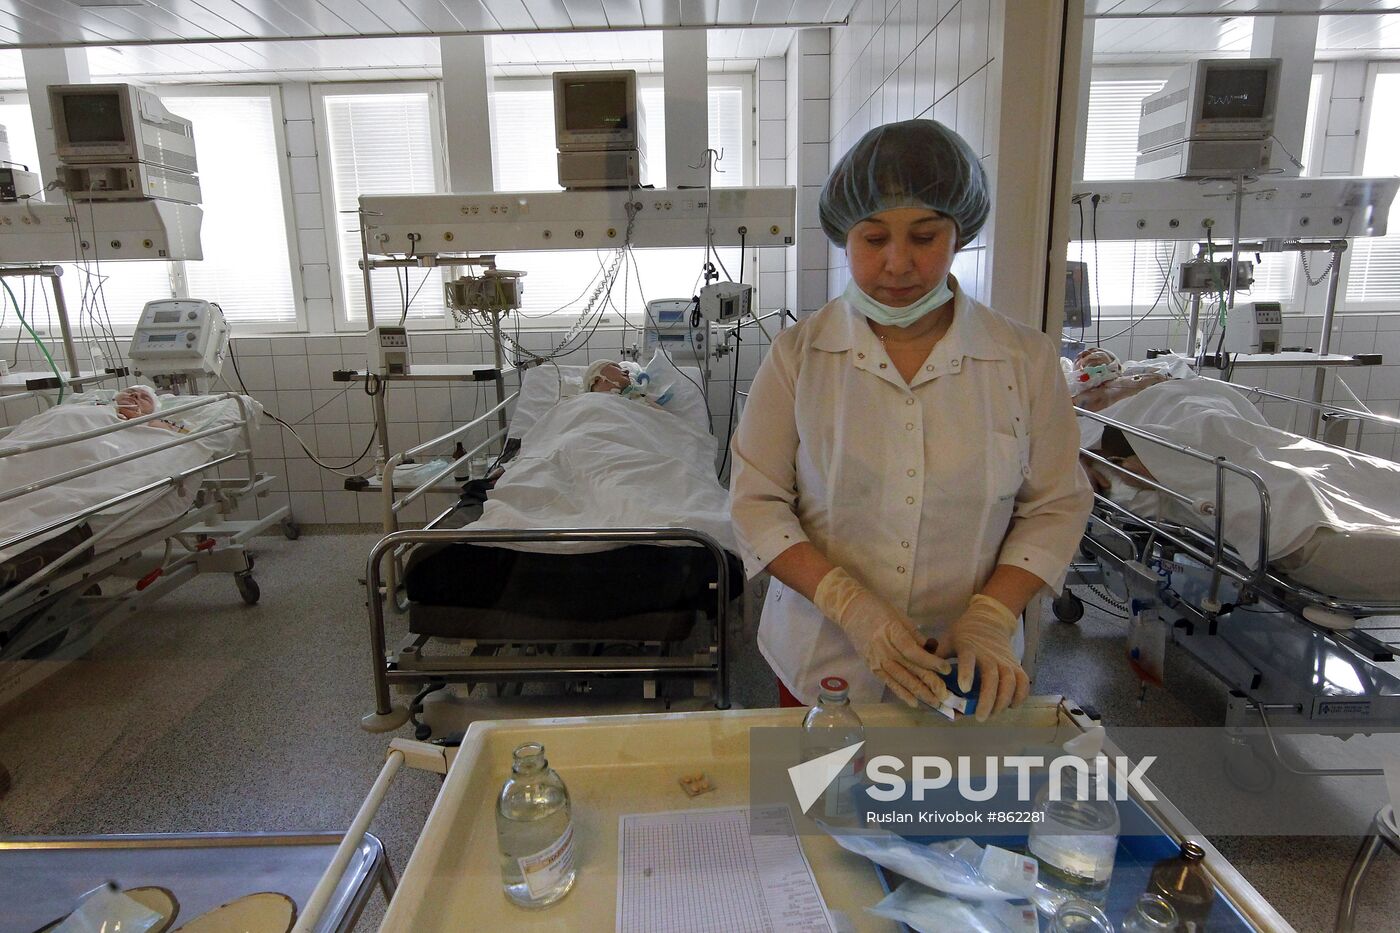 Neurology intensive care unit at Sklifosovsky Research Institute